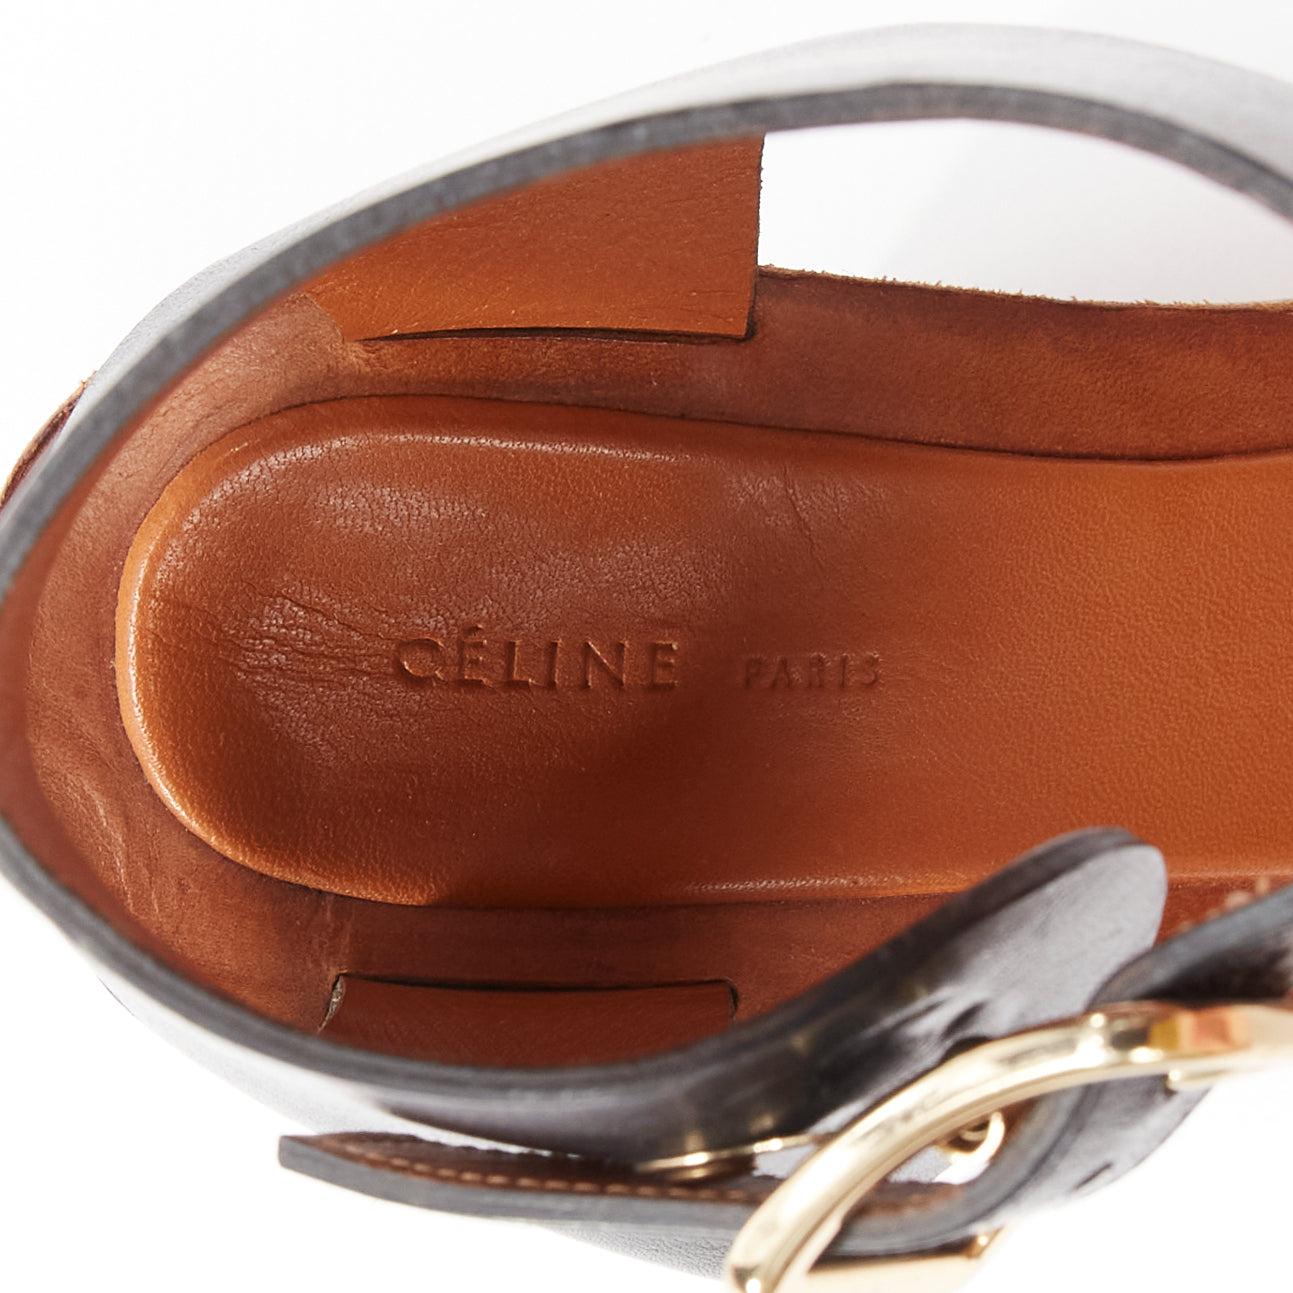 CELINE Phoebe Philo Bam Bam black open toe silver metal block heel sandal EU37 For Sale 5